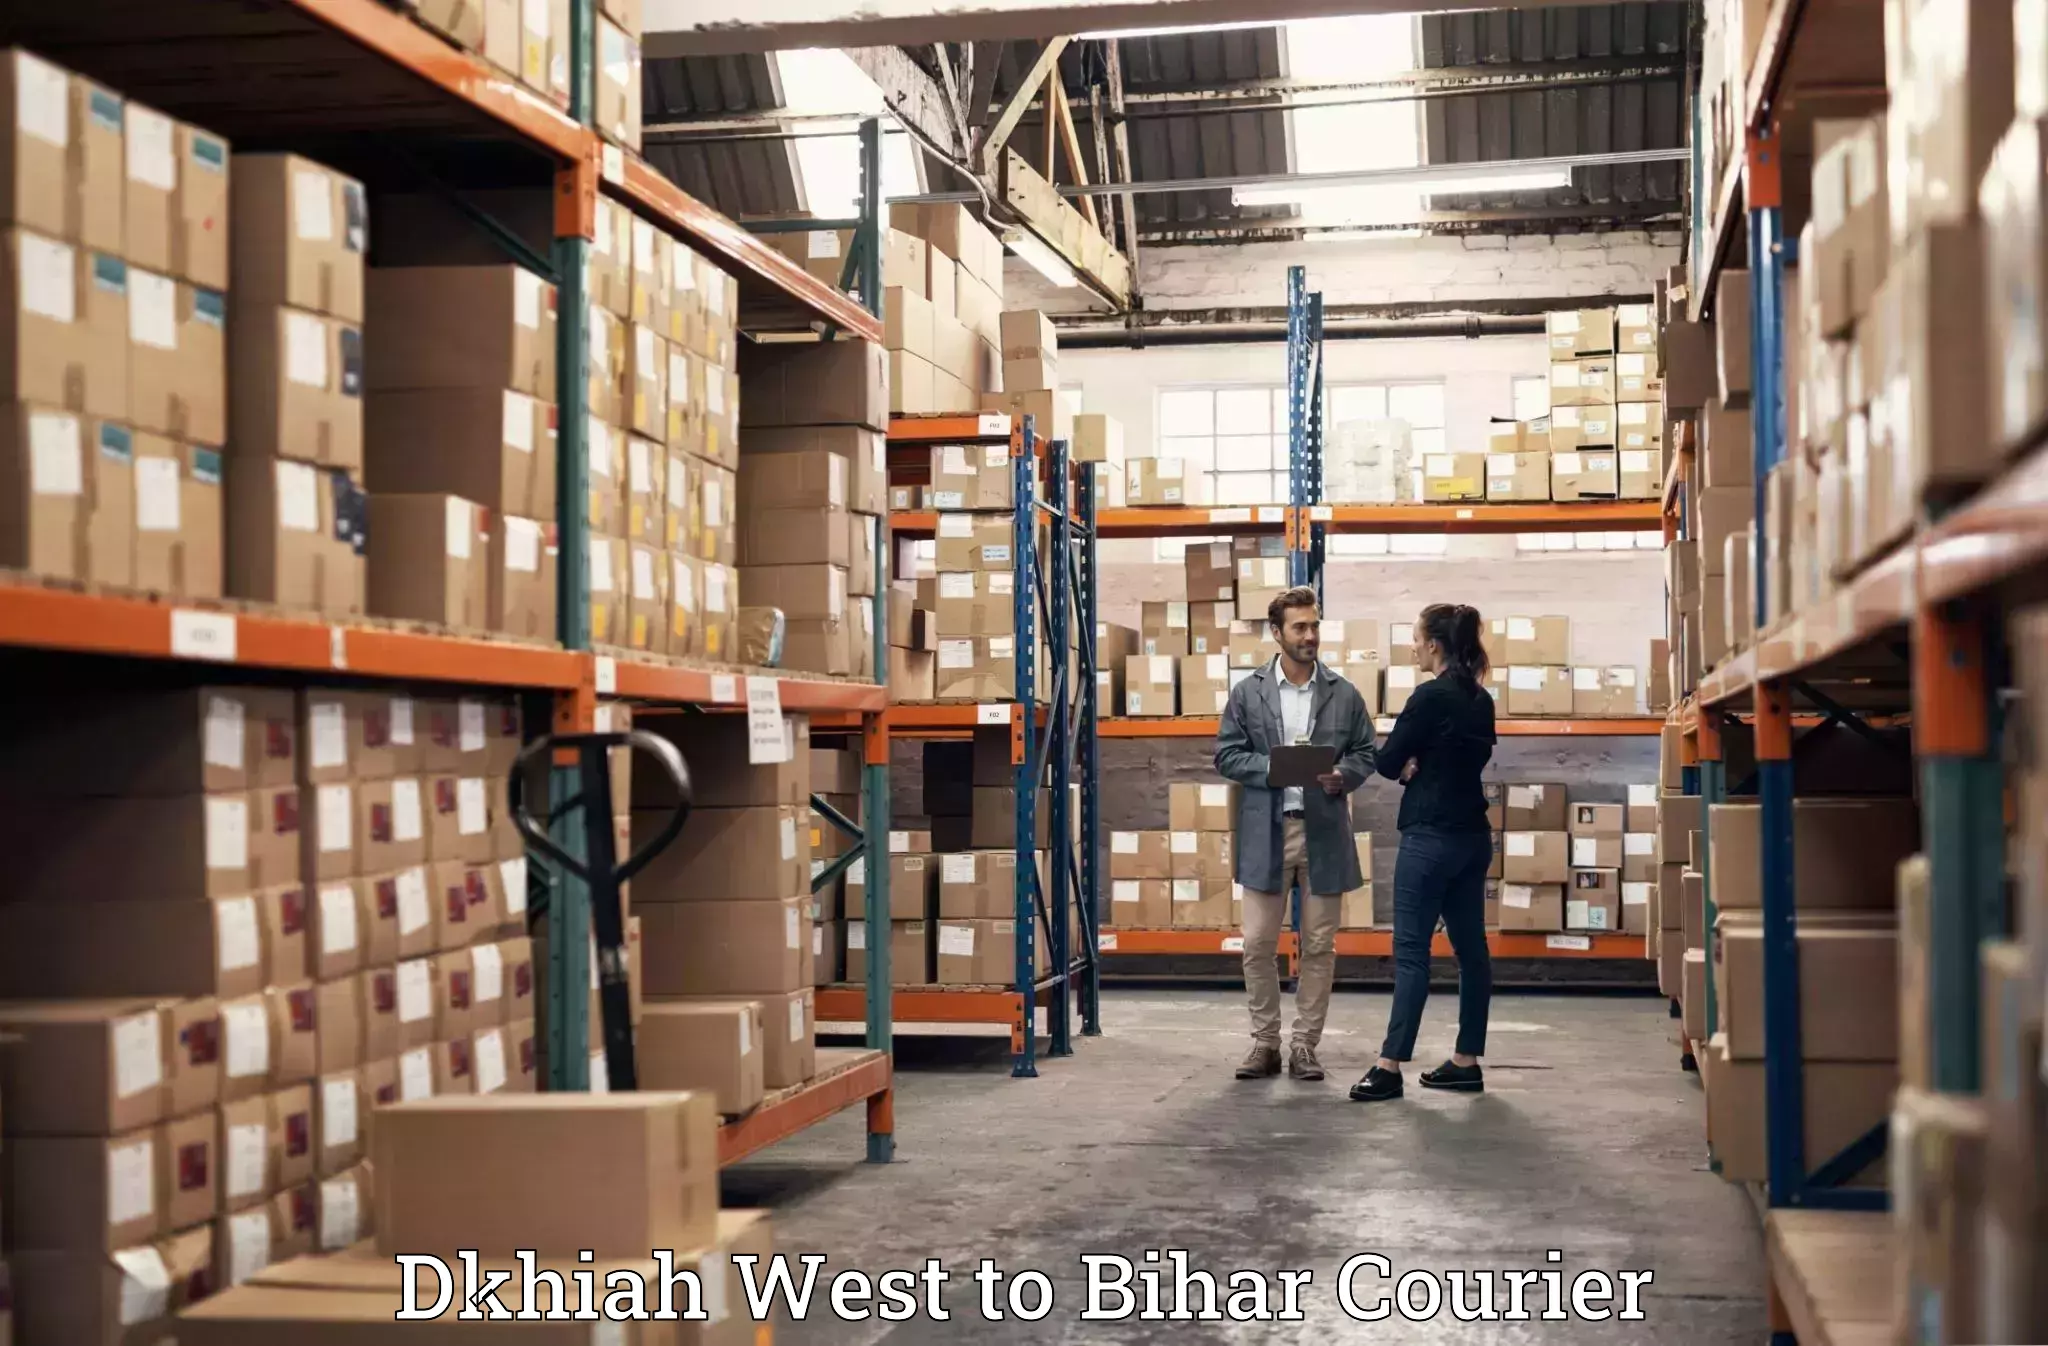 Baggage transport services Dkhiah West to Dinara